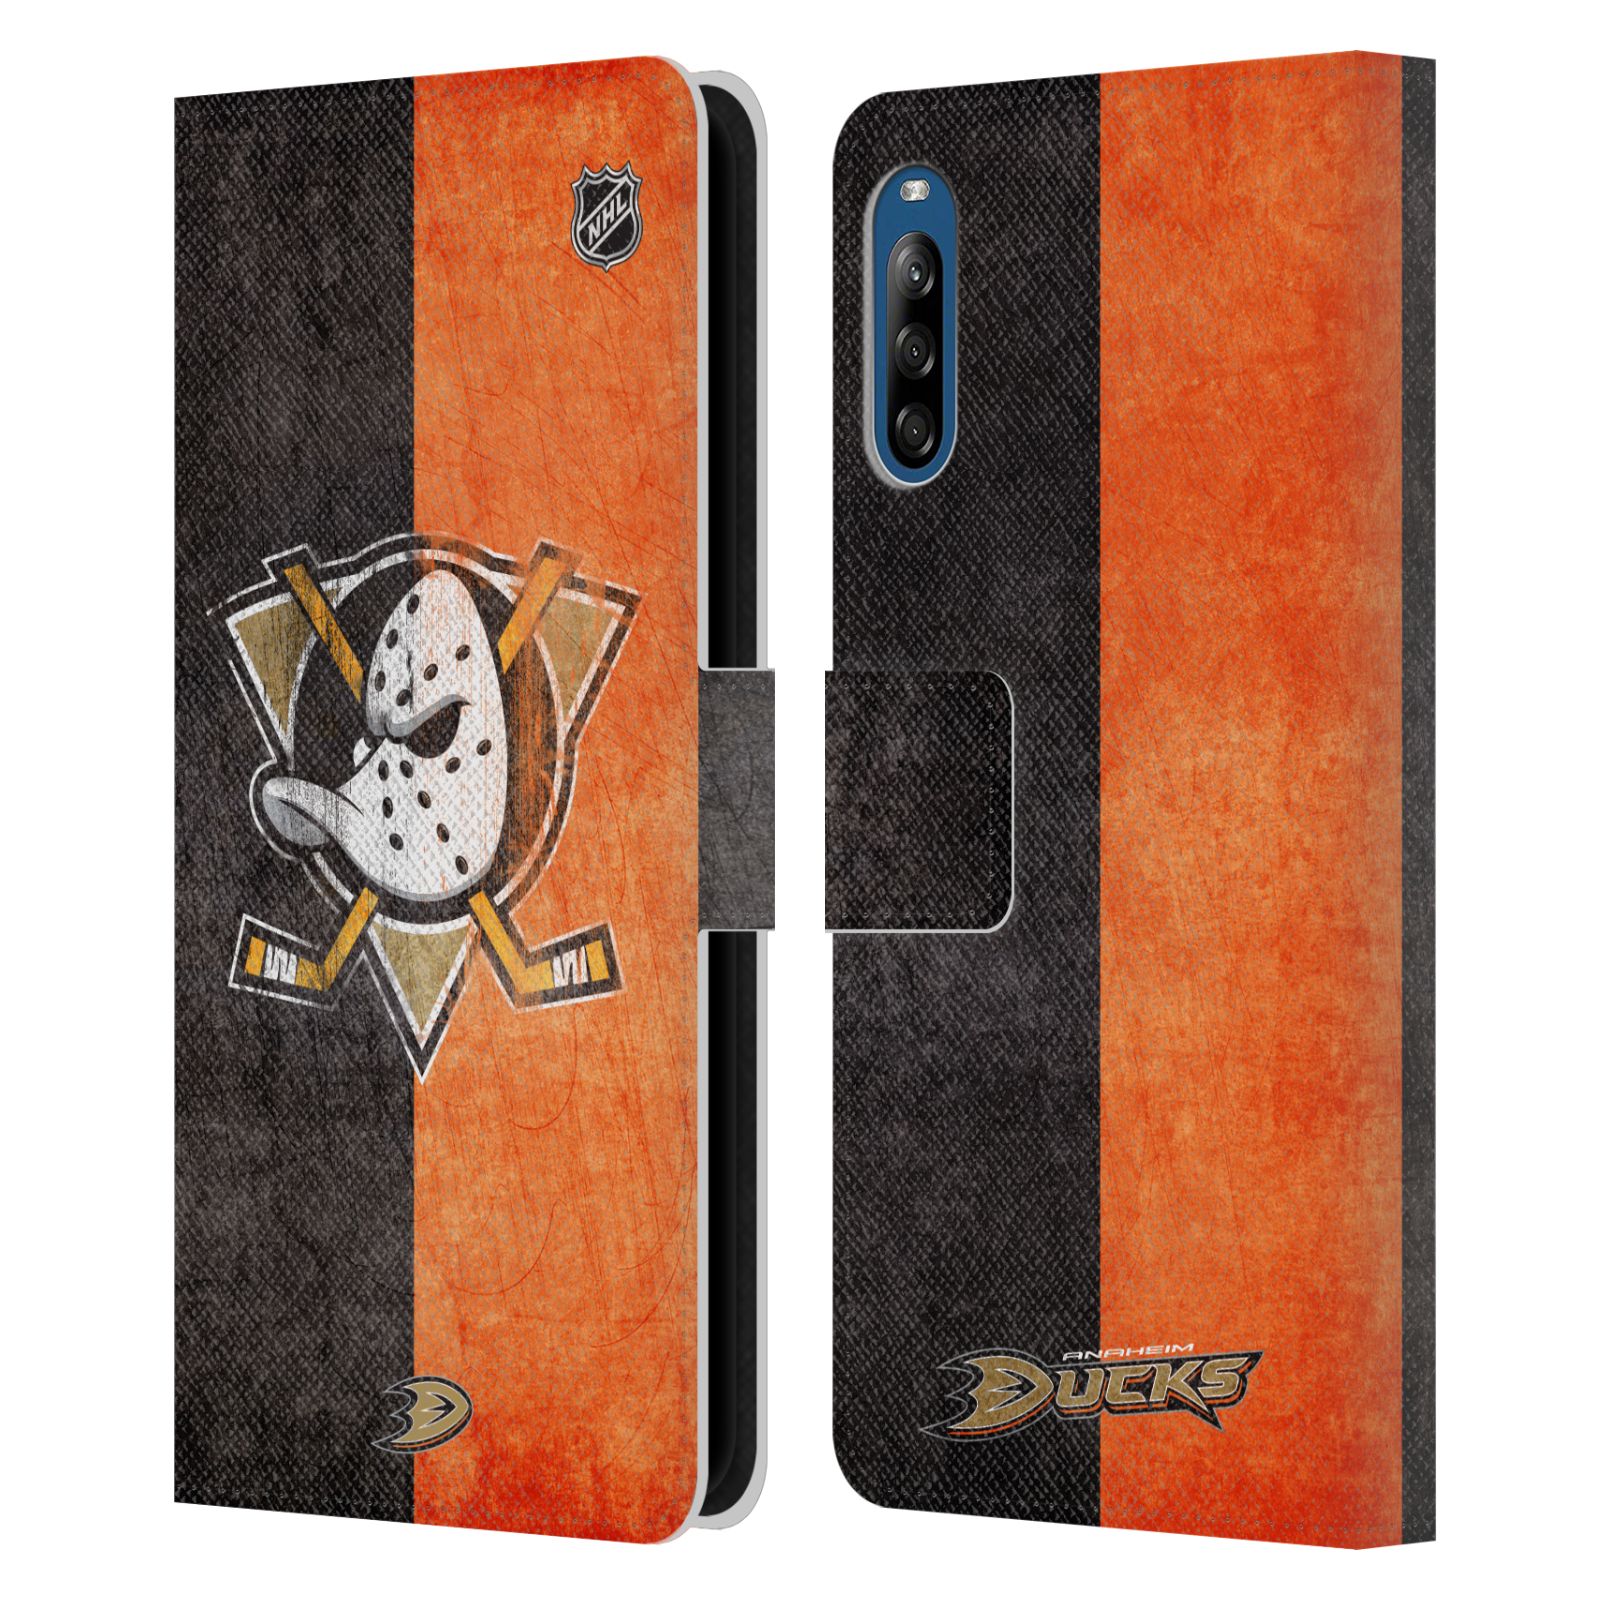 Pouzdro pro mobil Sony Xperia L4 - HEAD CASE - NHL - Anaheim Ducks - Vintage znak